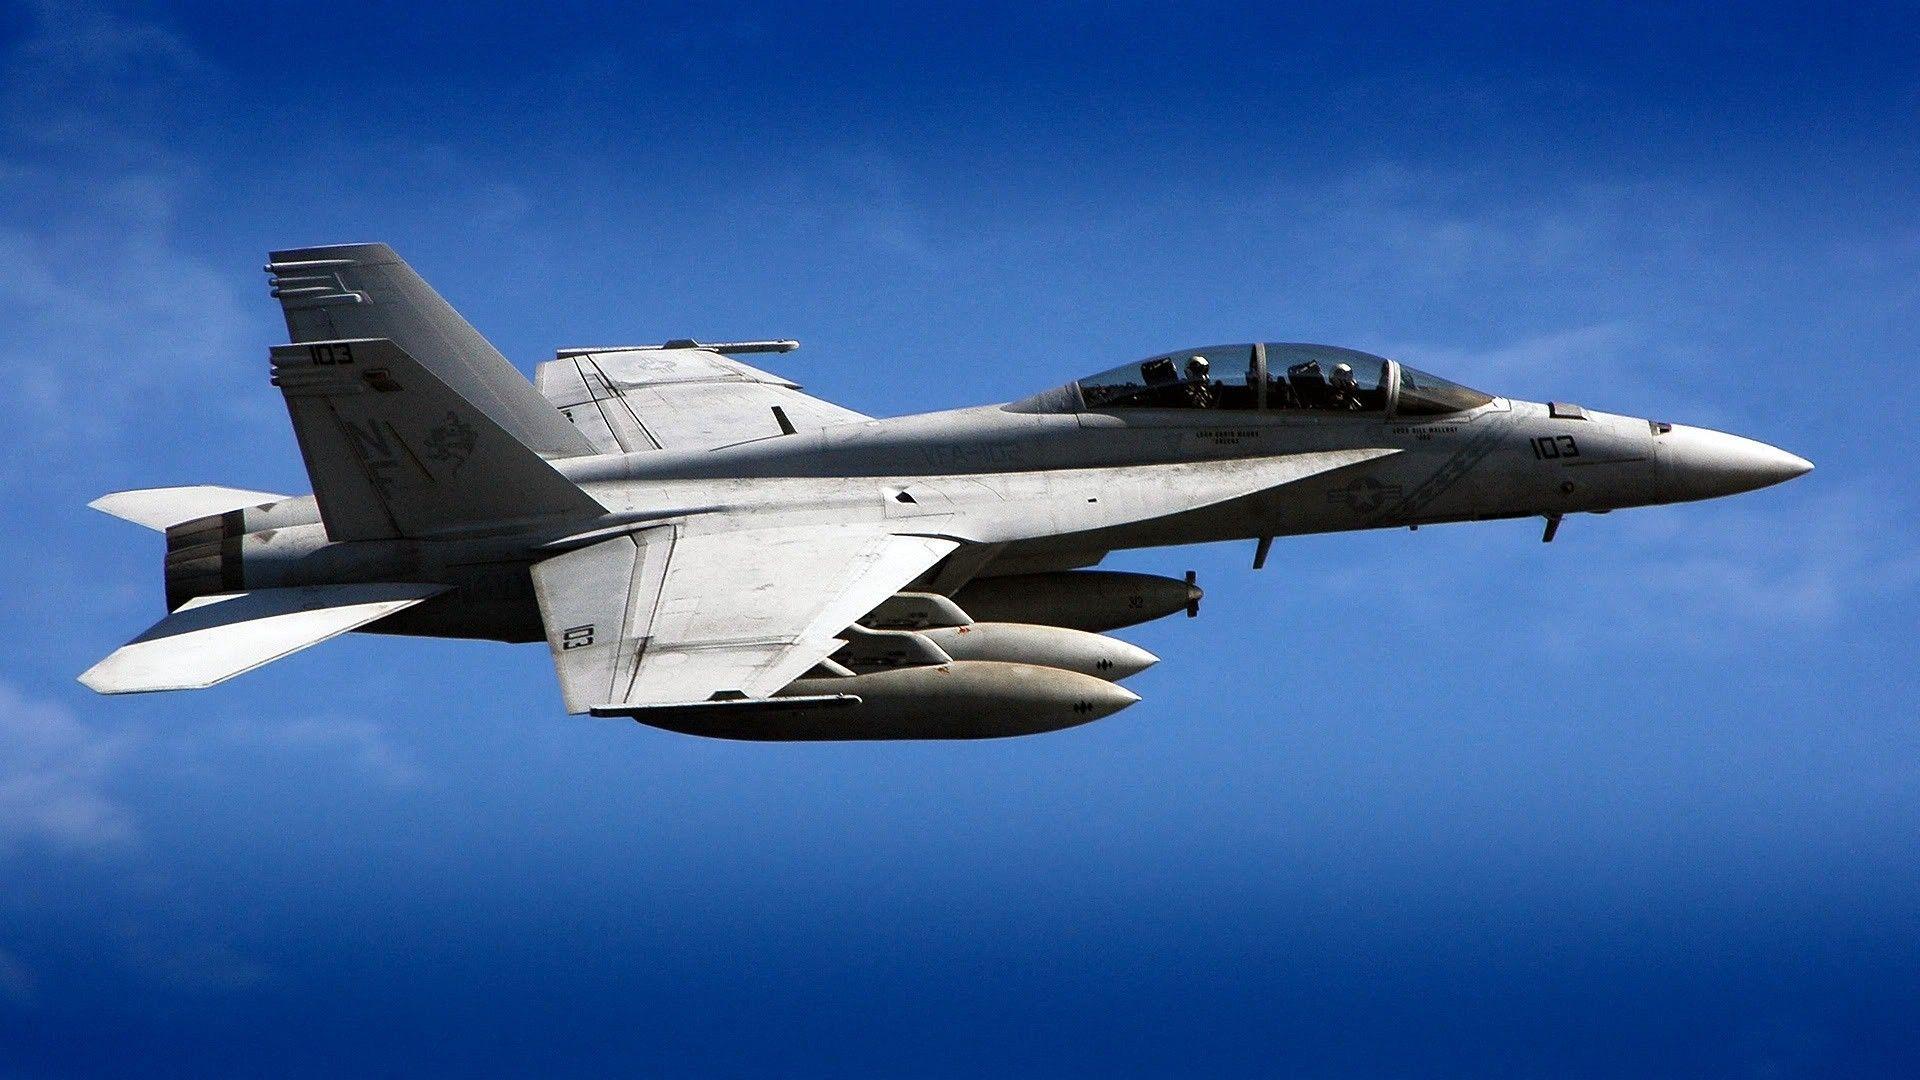 Download desktop wallpaper F18 Hornet warplane in the clear sky